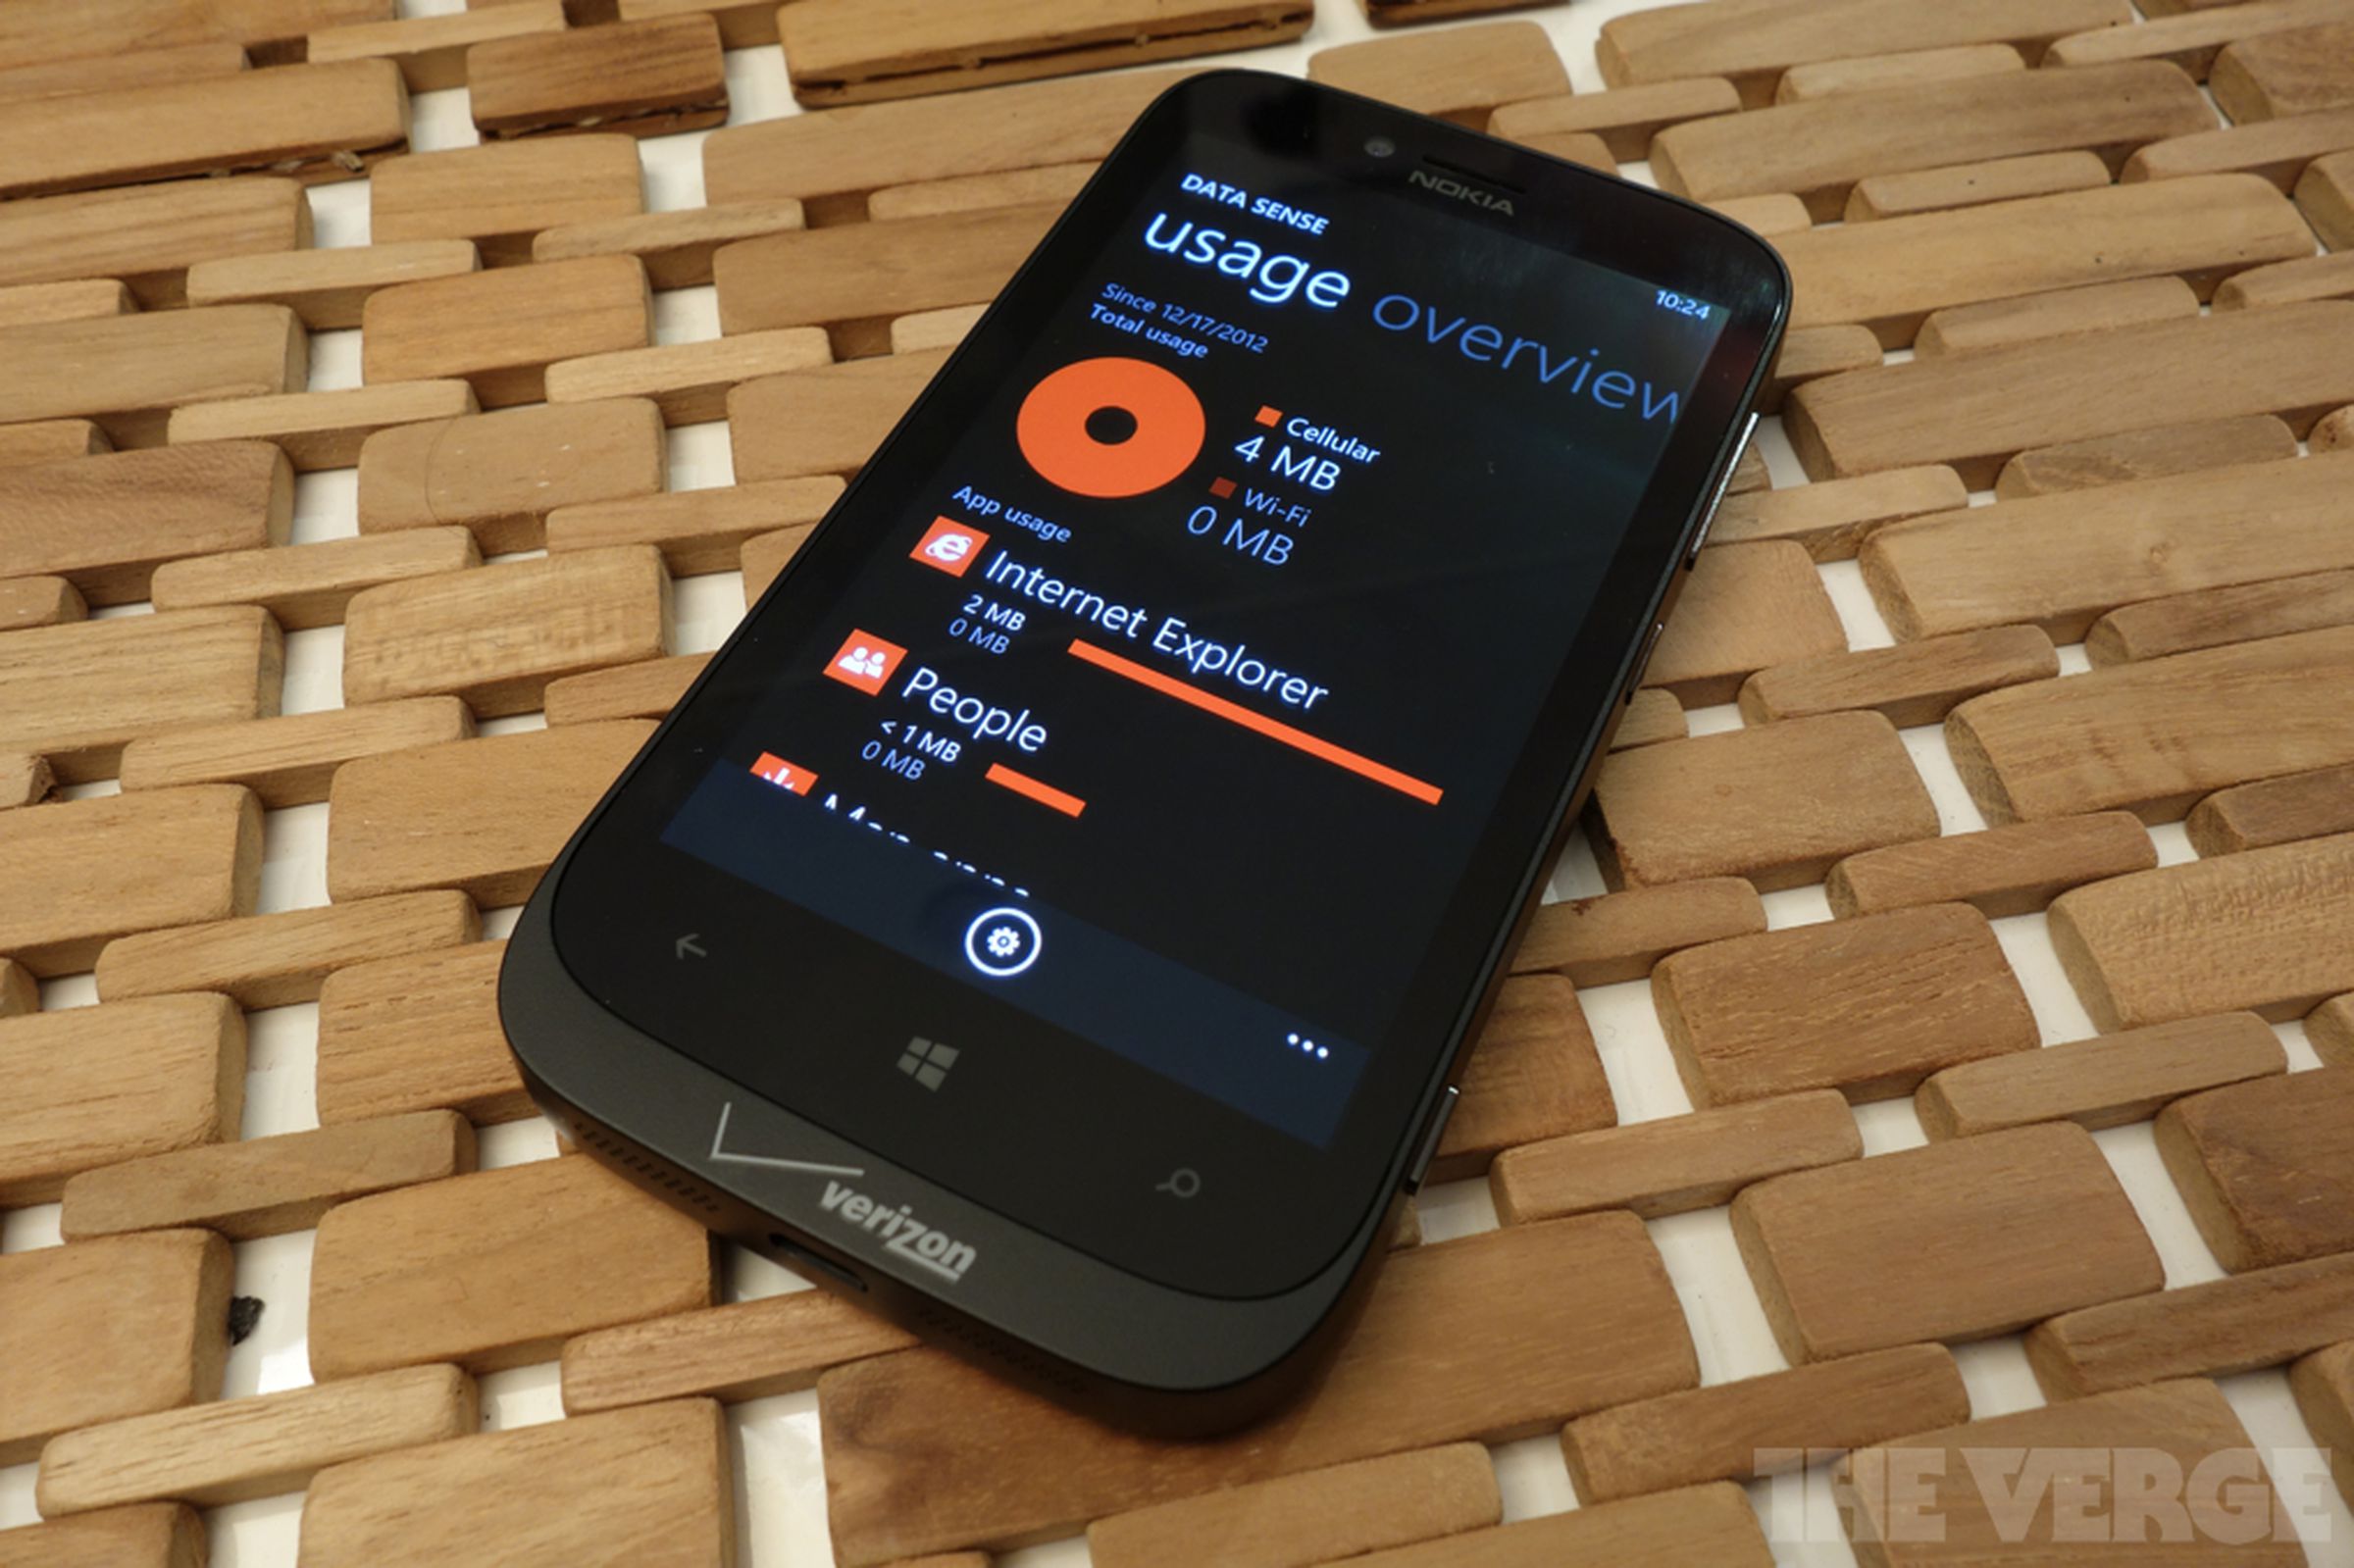 Nokia Lumia 822 hands-on review photos